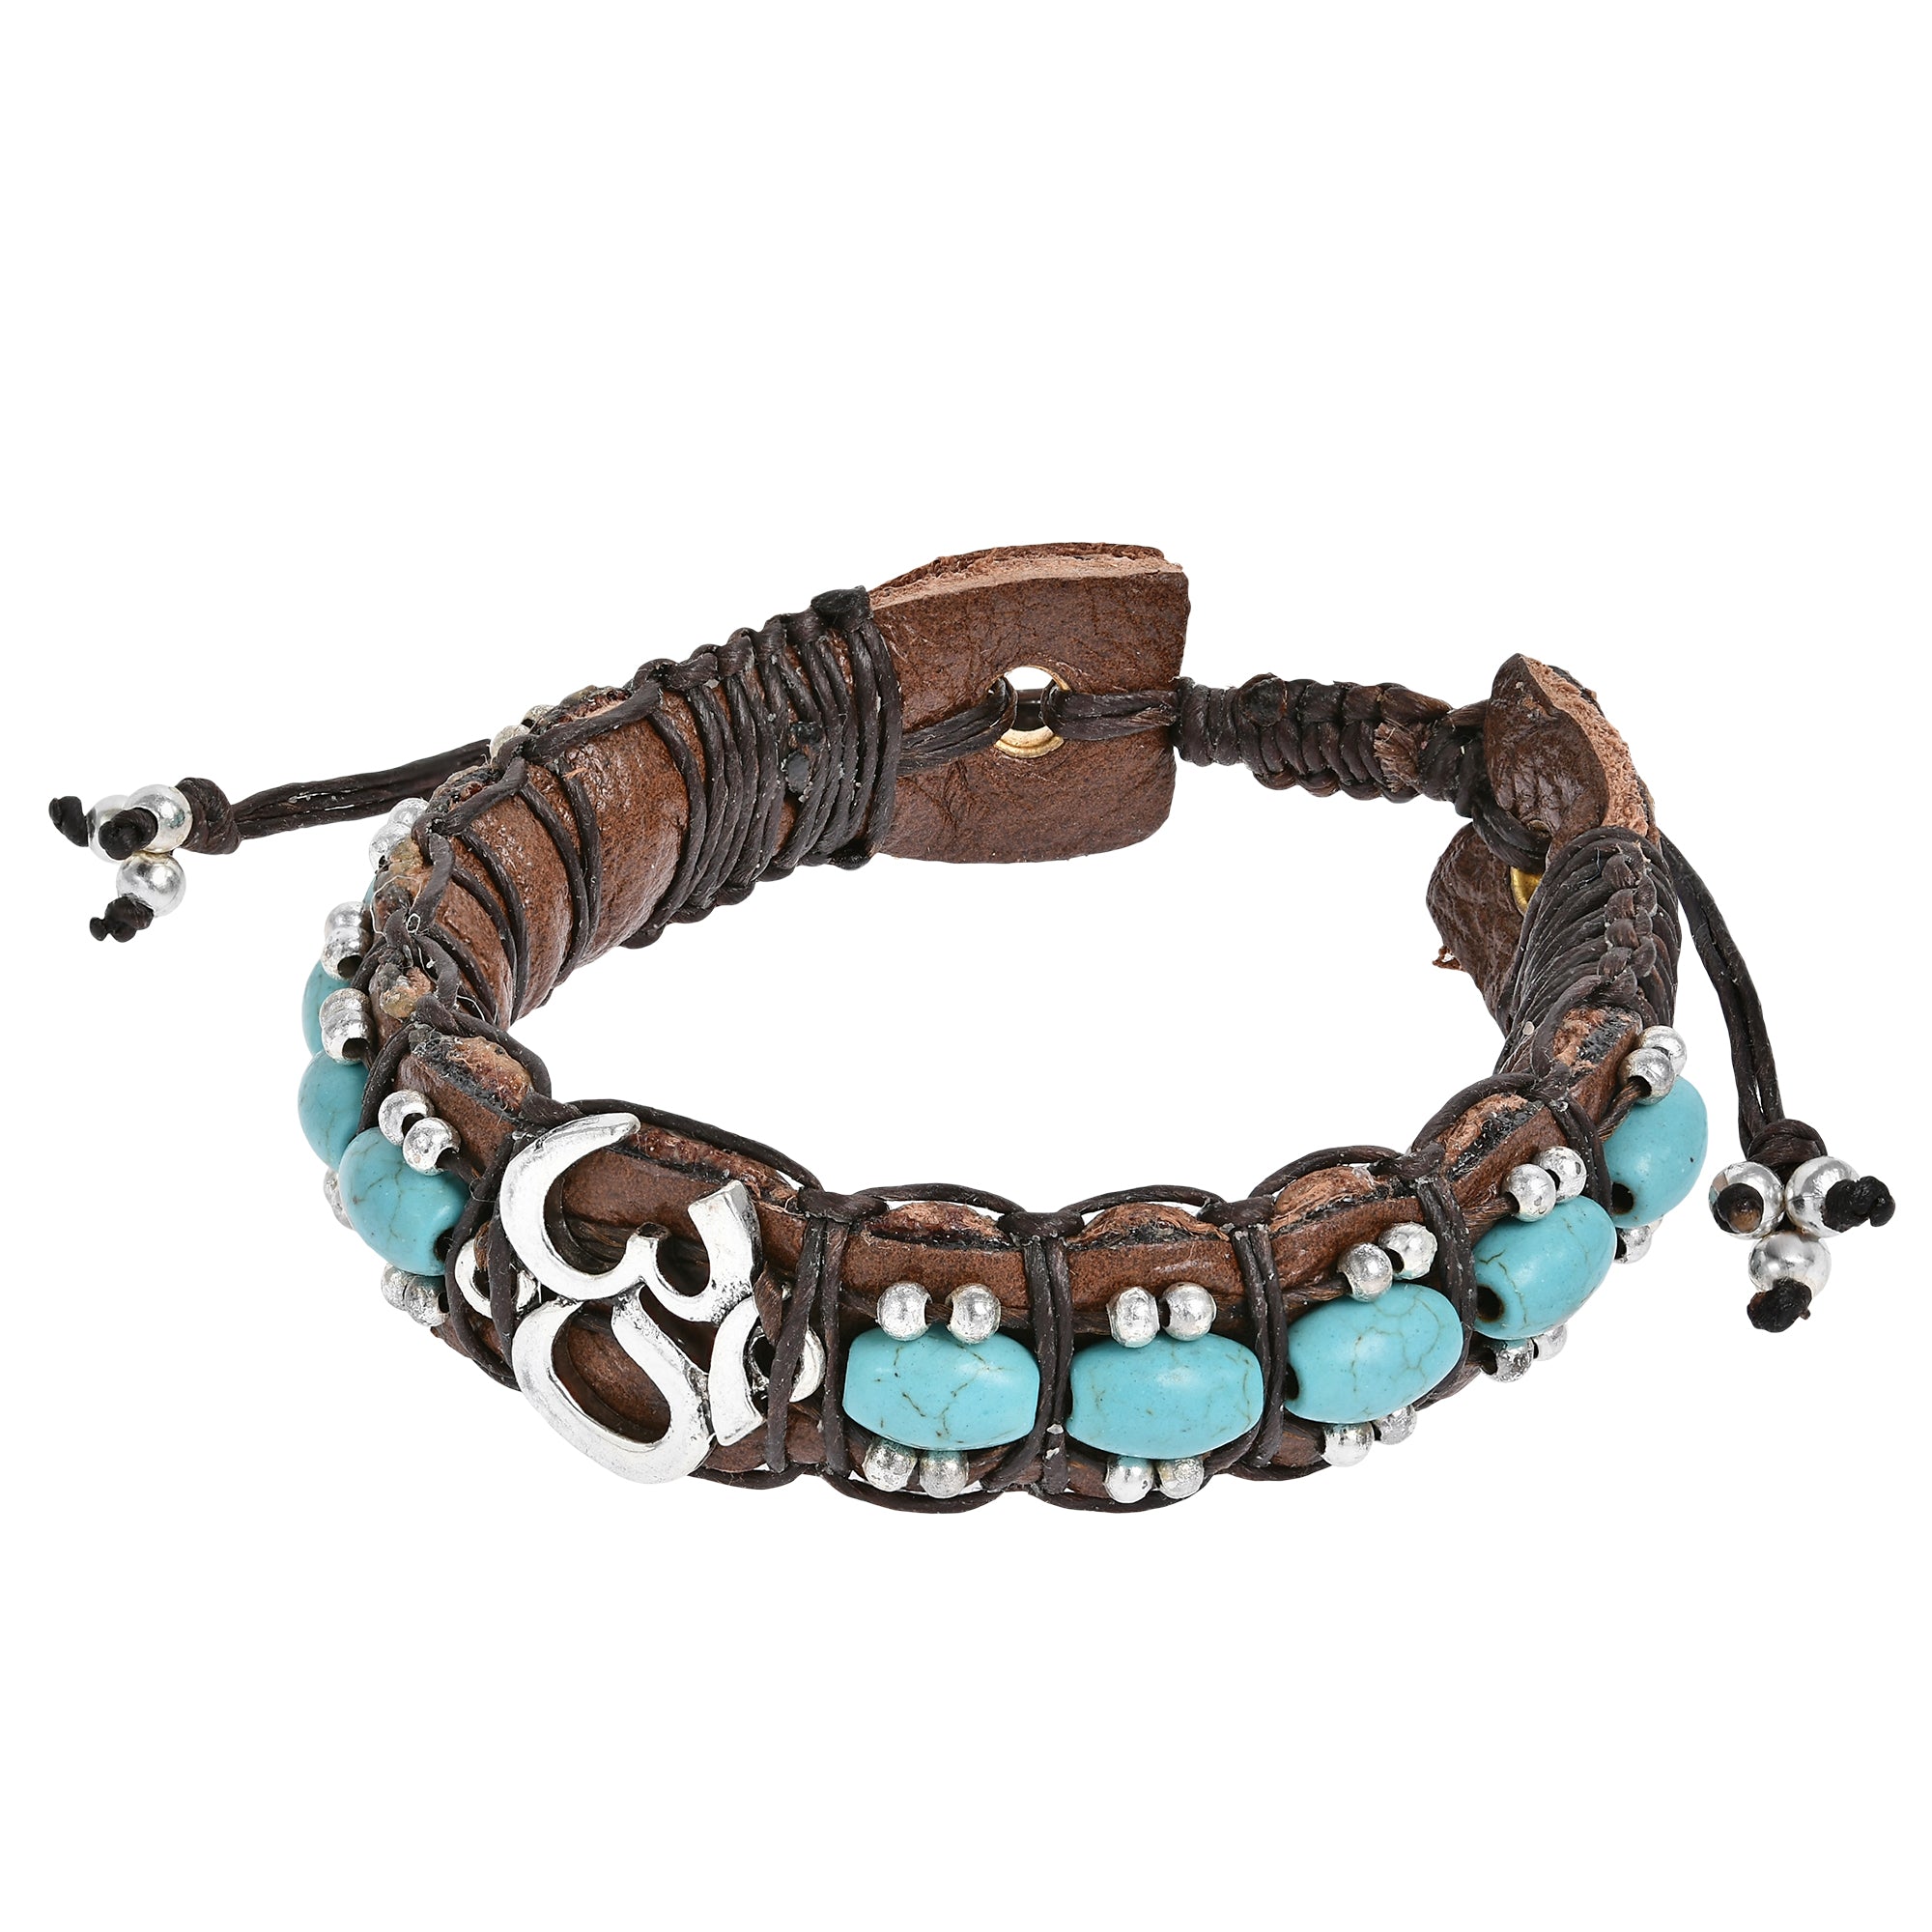 Handcrafted Mystical Meditation Aum Leather Bracelet w/ Turquoise Stones